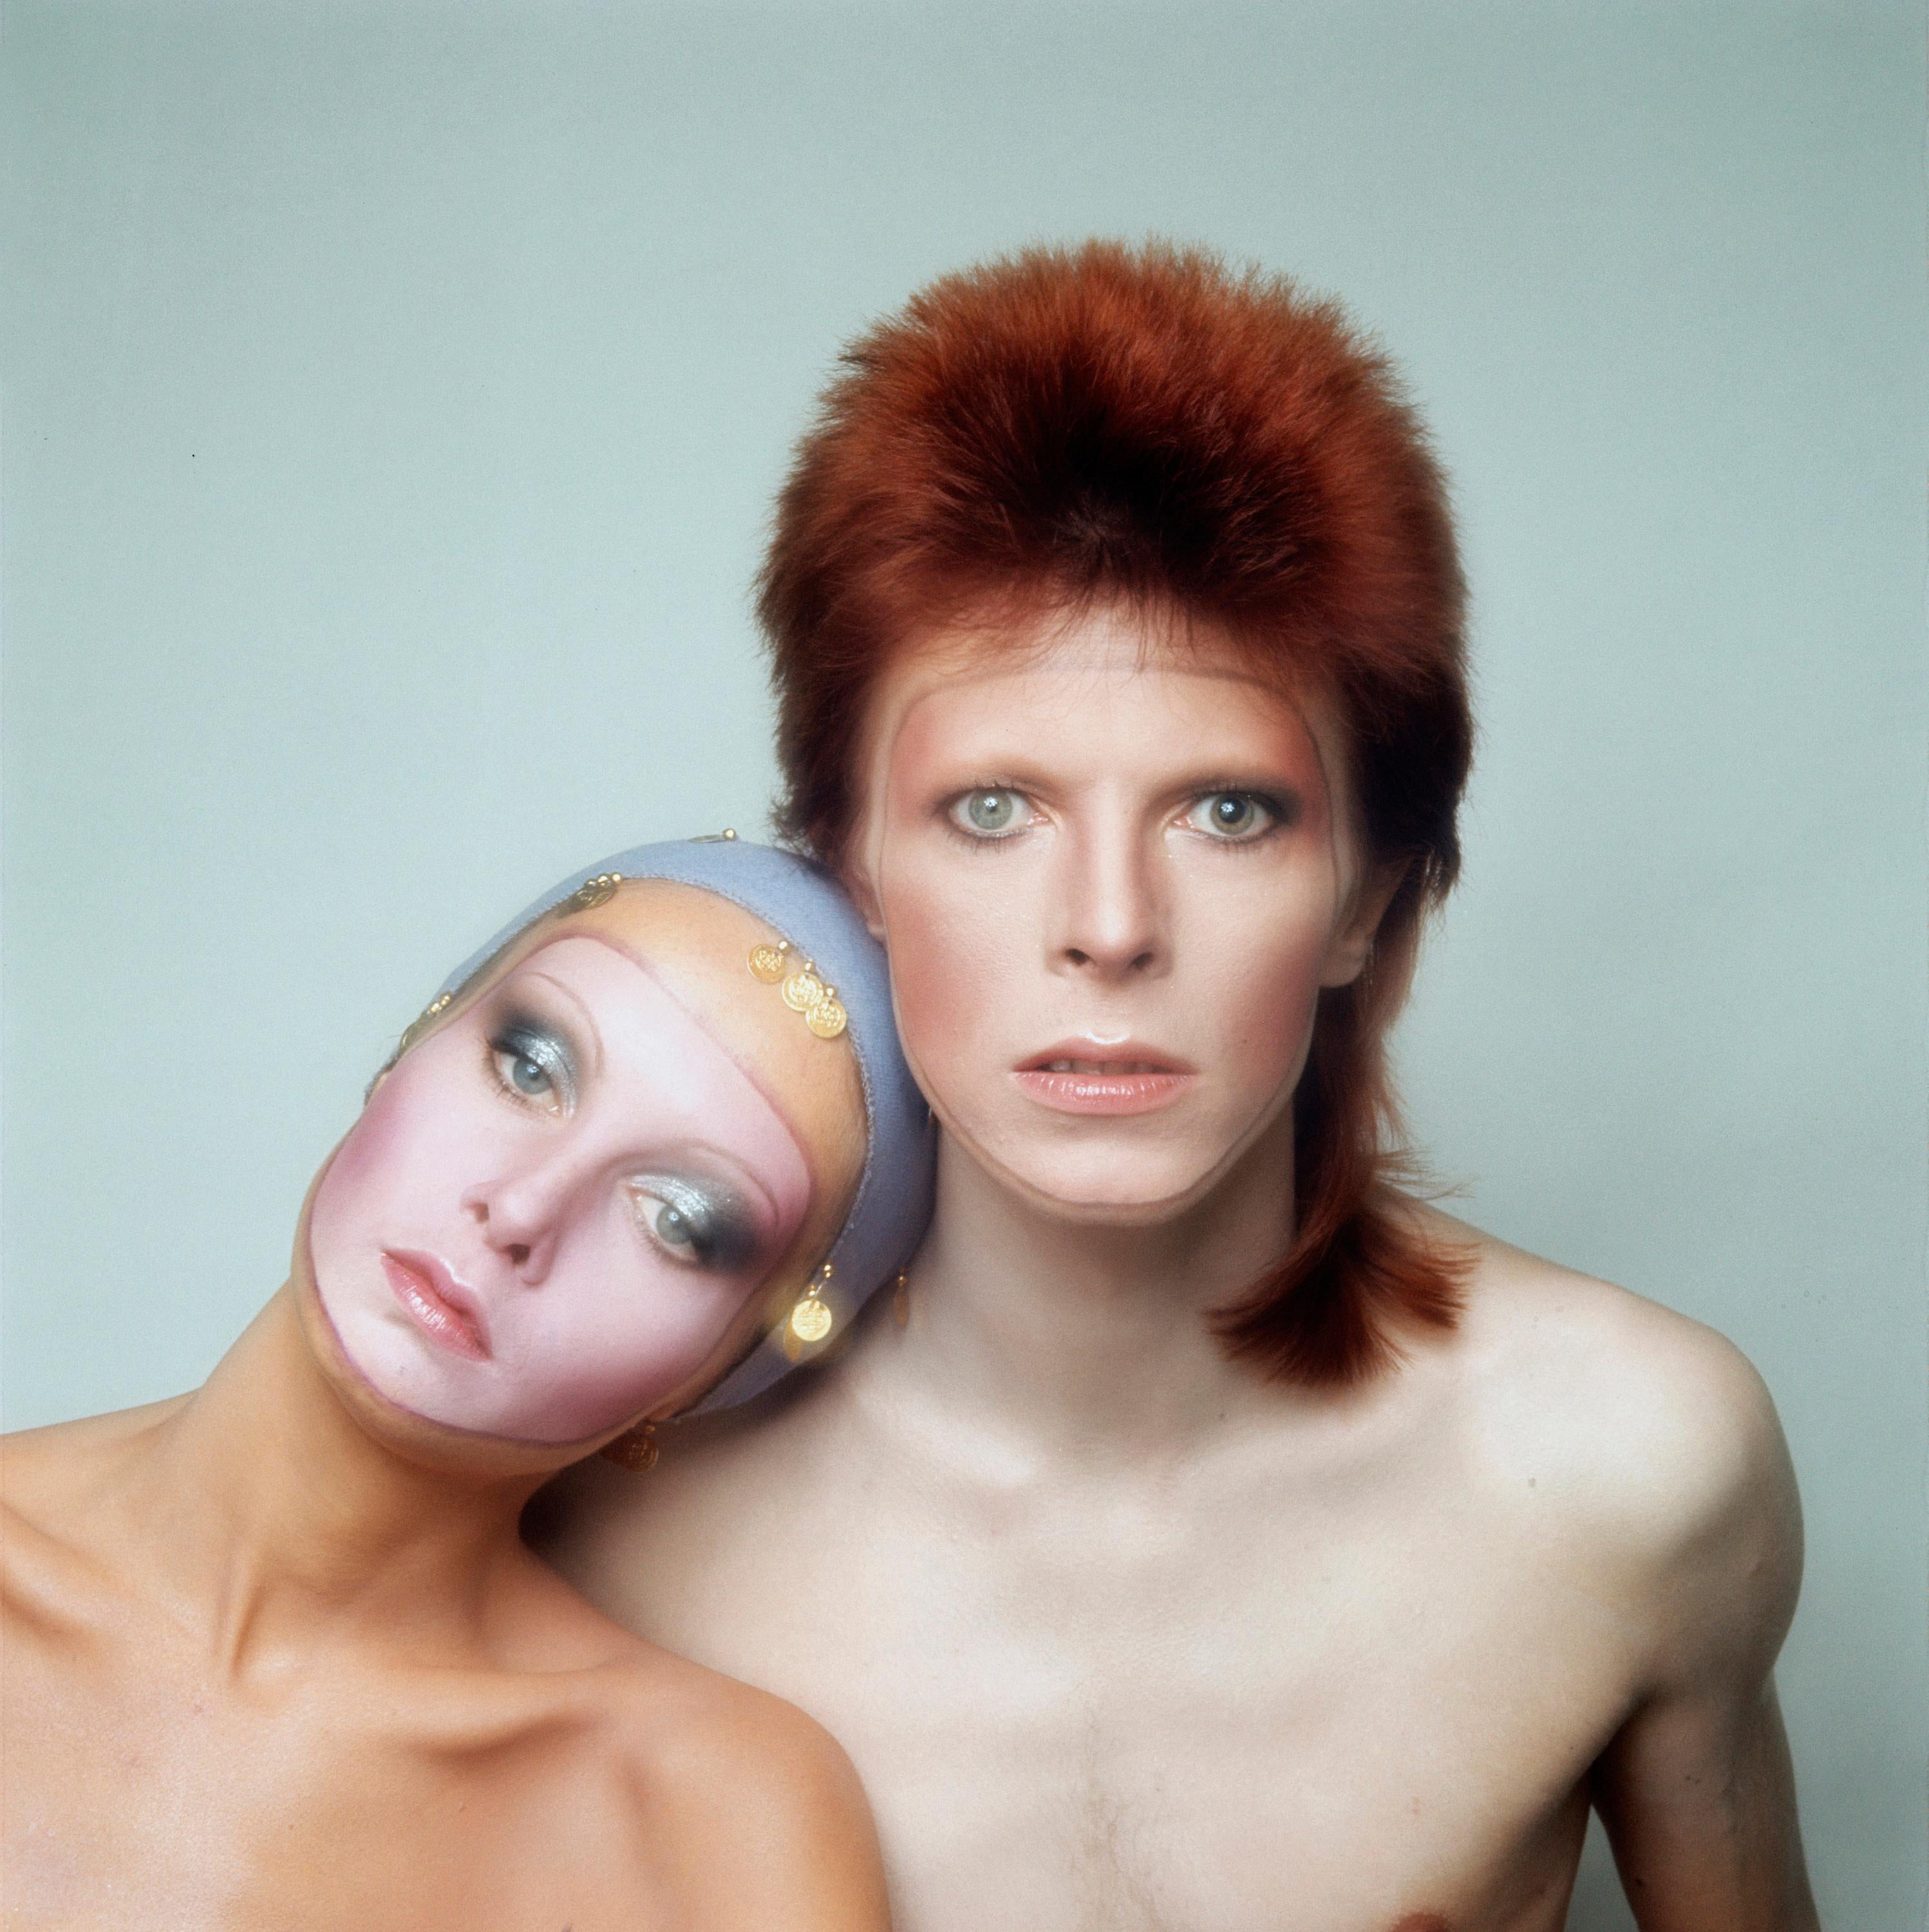 Justin de Villaneuve Color Photograph - David Bowie "Pin Ups" cover